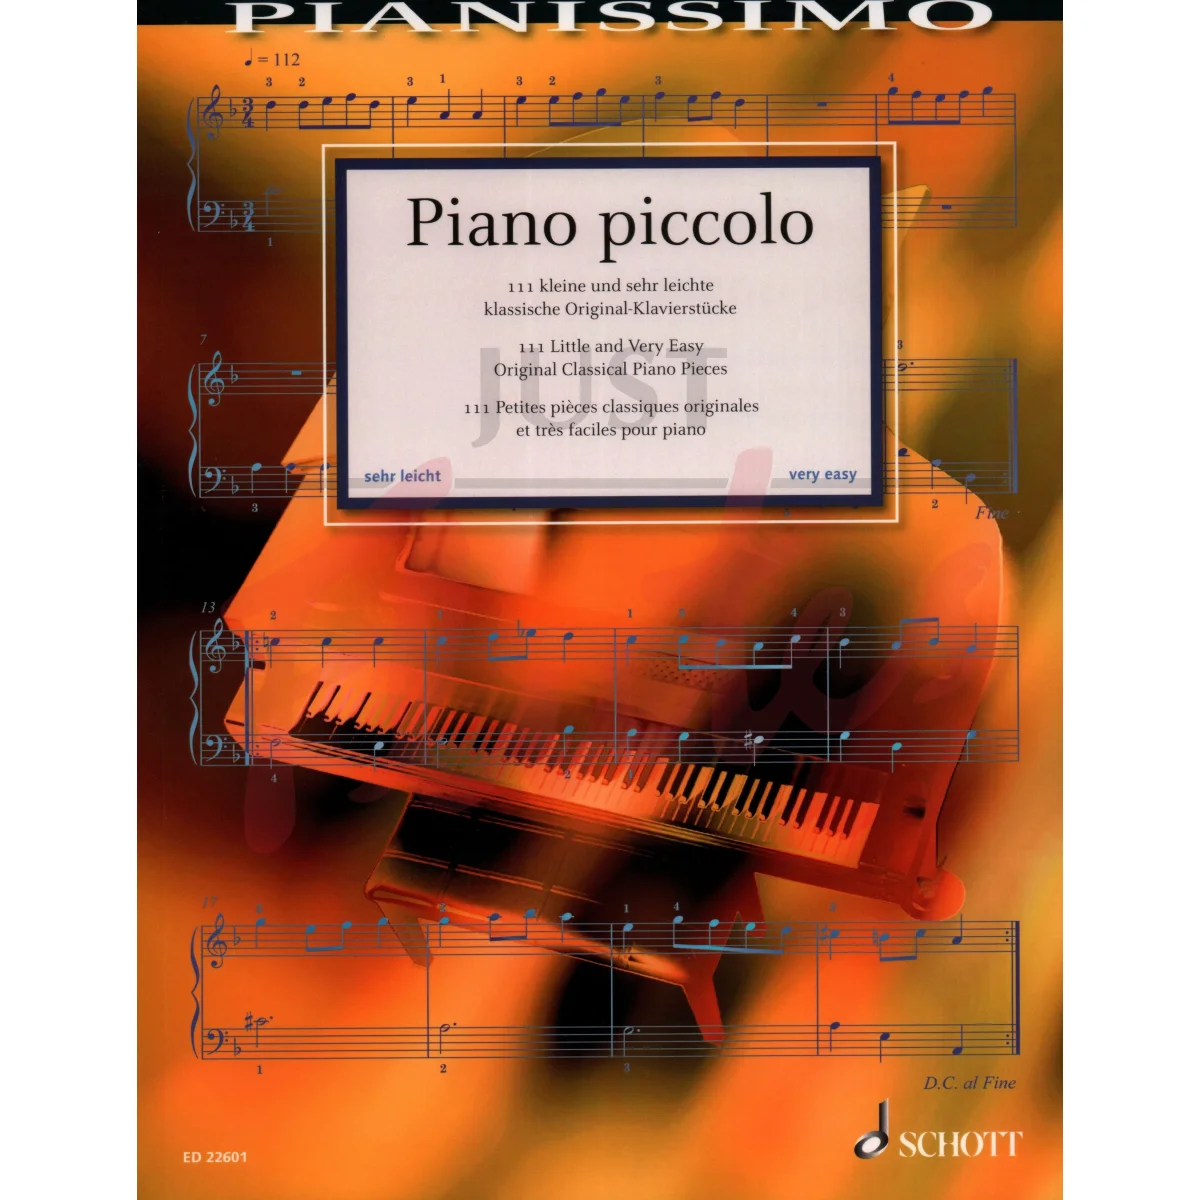 Piano Piccolo: 111 Little and Very Easy Original Classical Piano Pieces